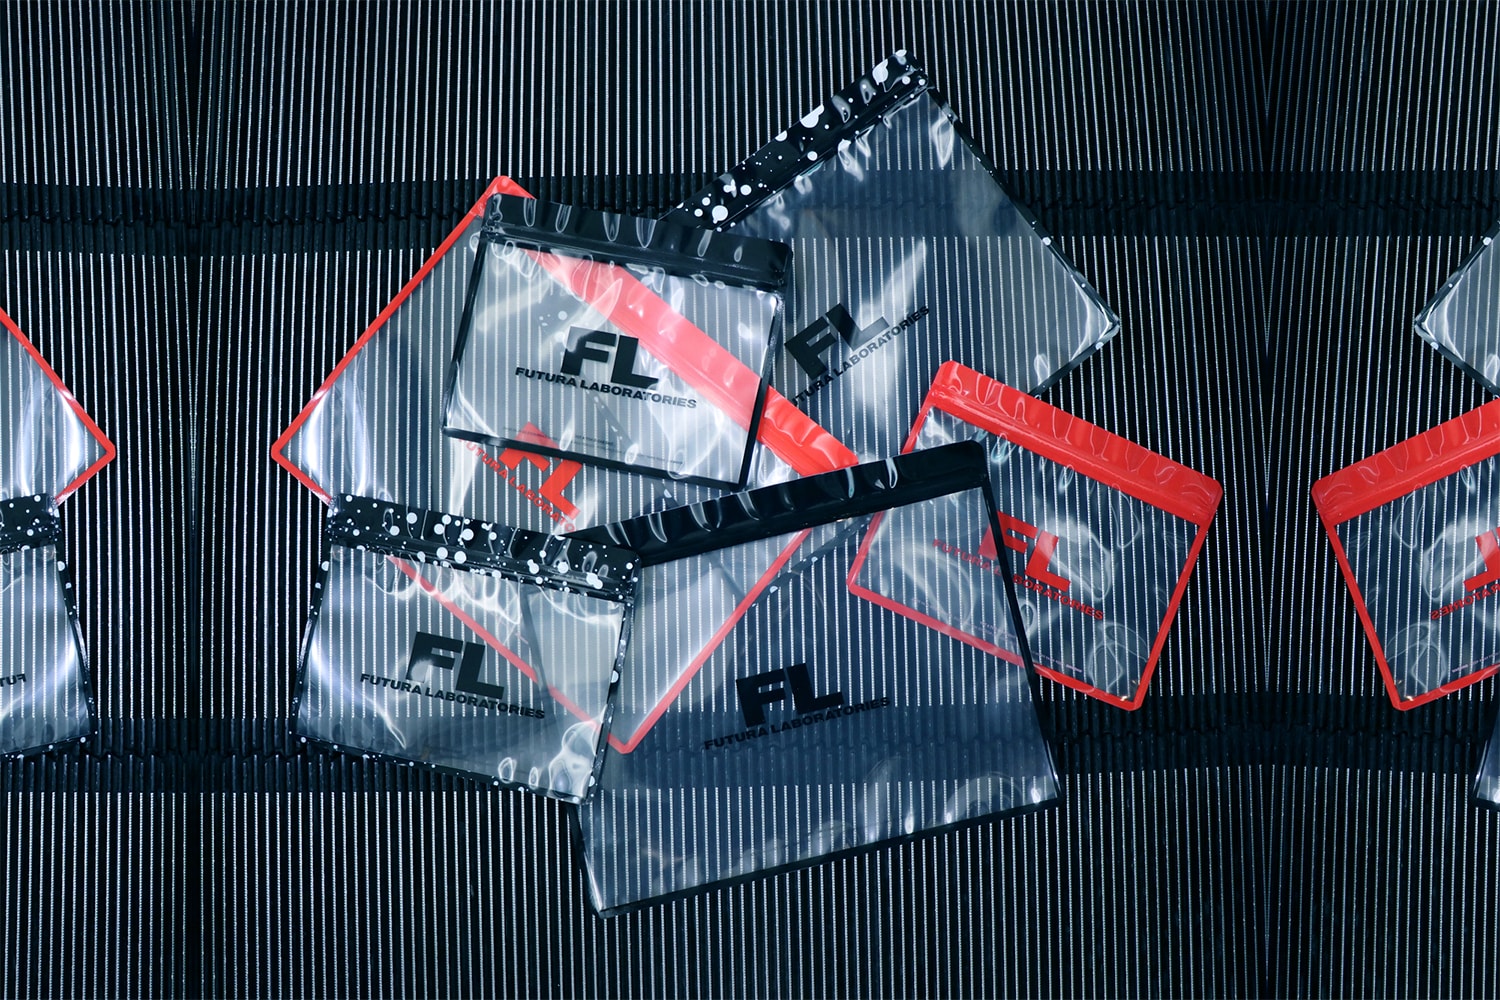 Futura Laboratories Pake Release Info Japanese Zip Bag Red Black Drops graffiti Isetan Shinjuku Harajuku Pop Up